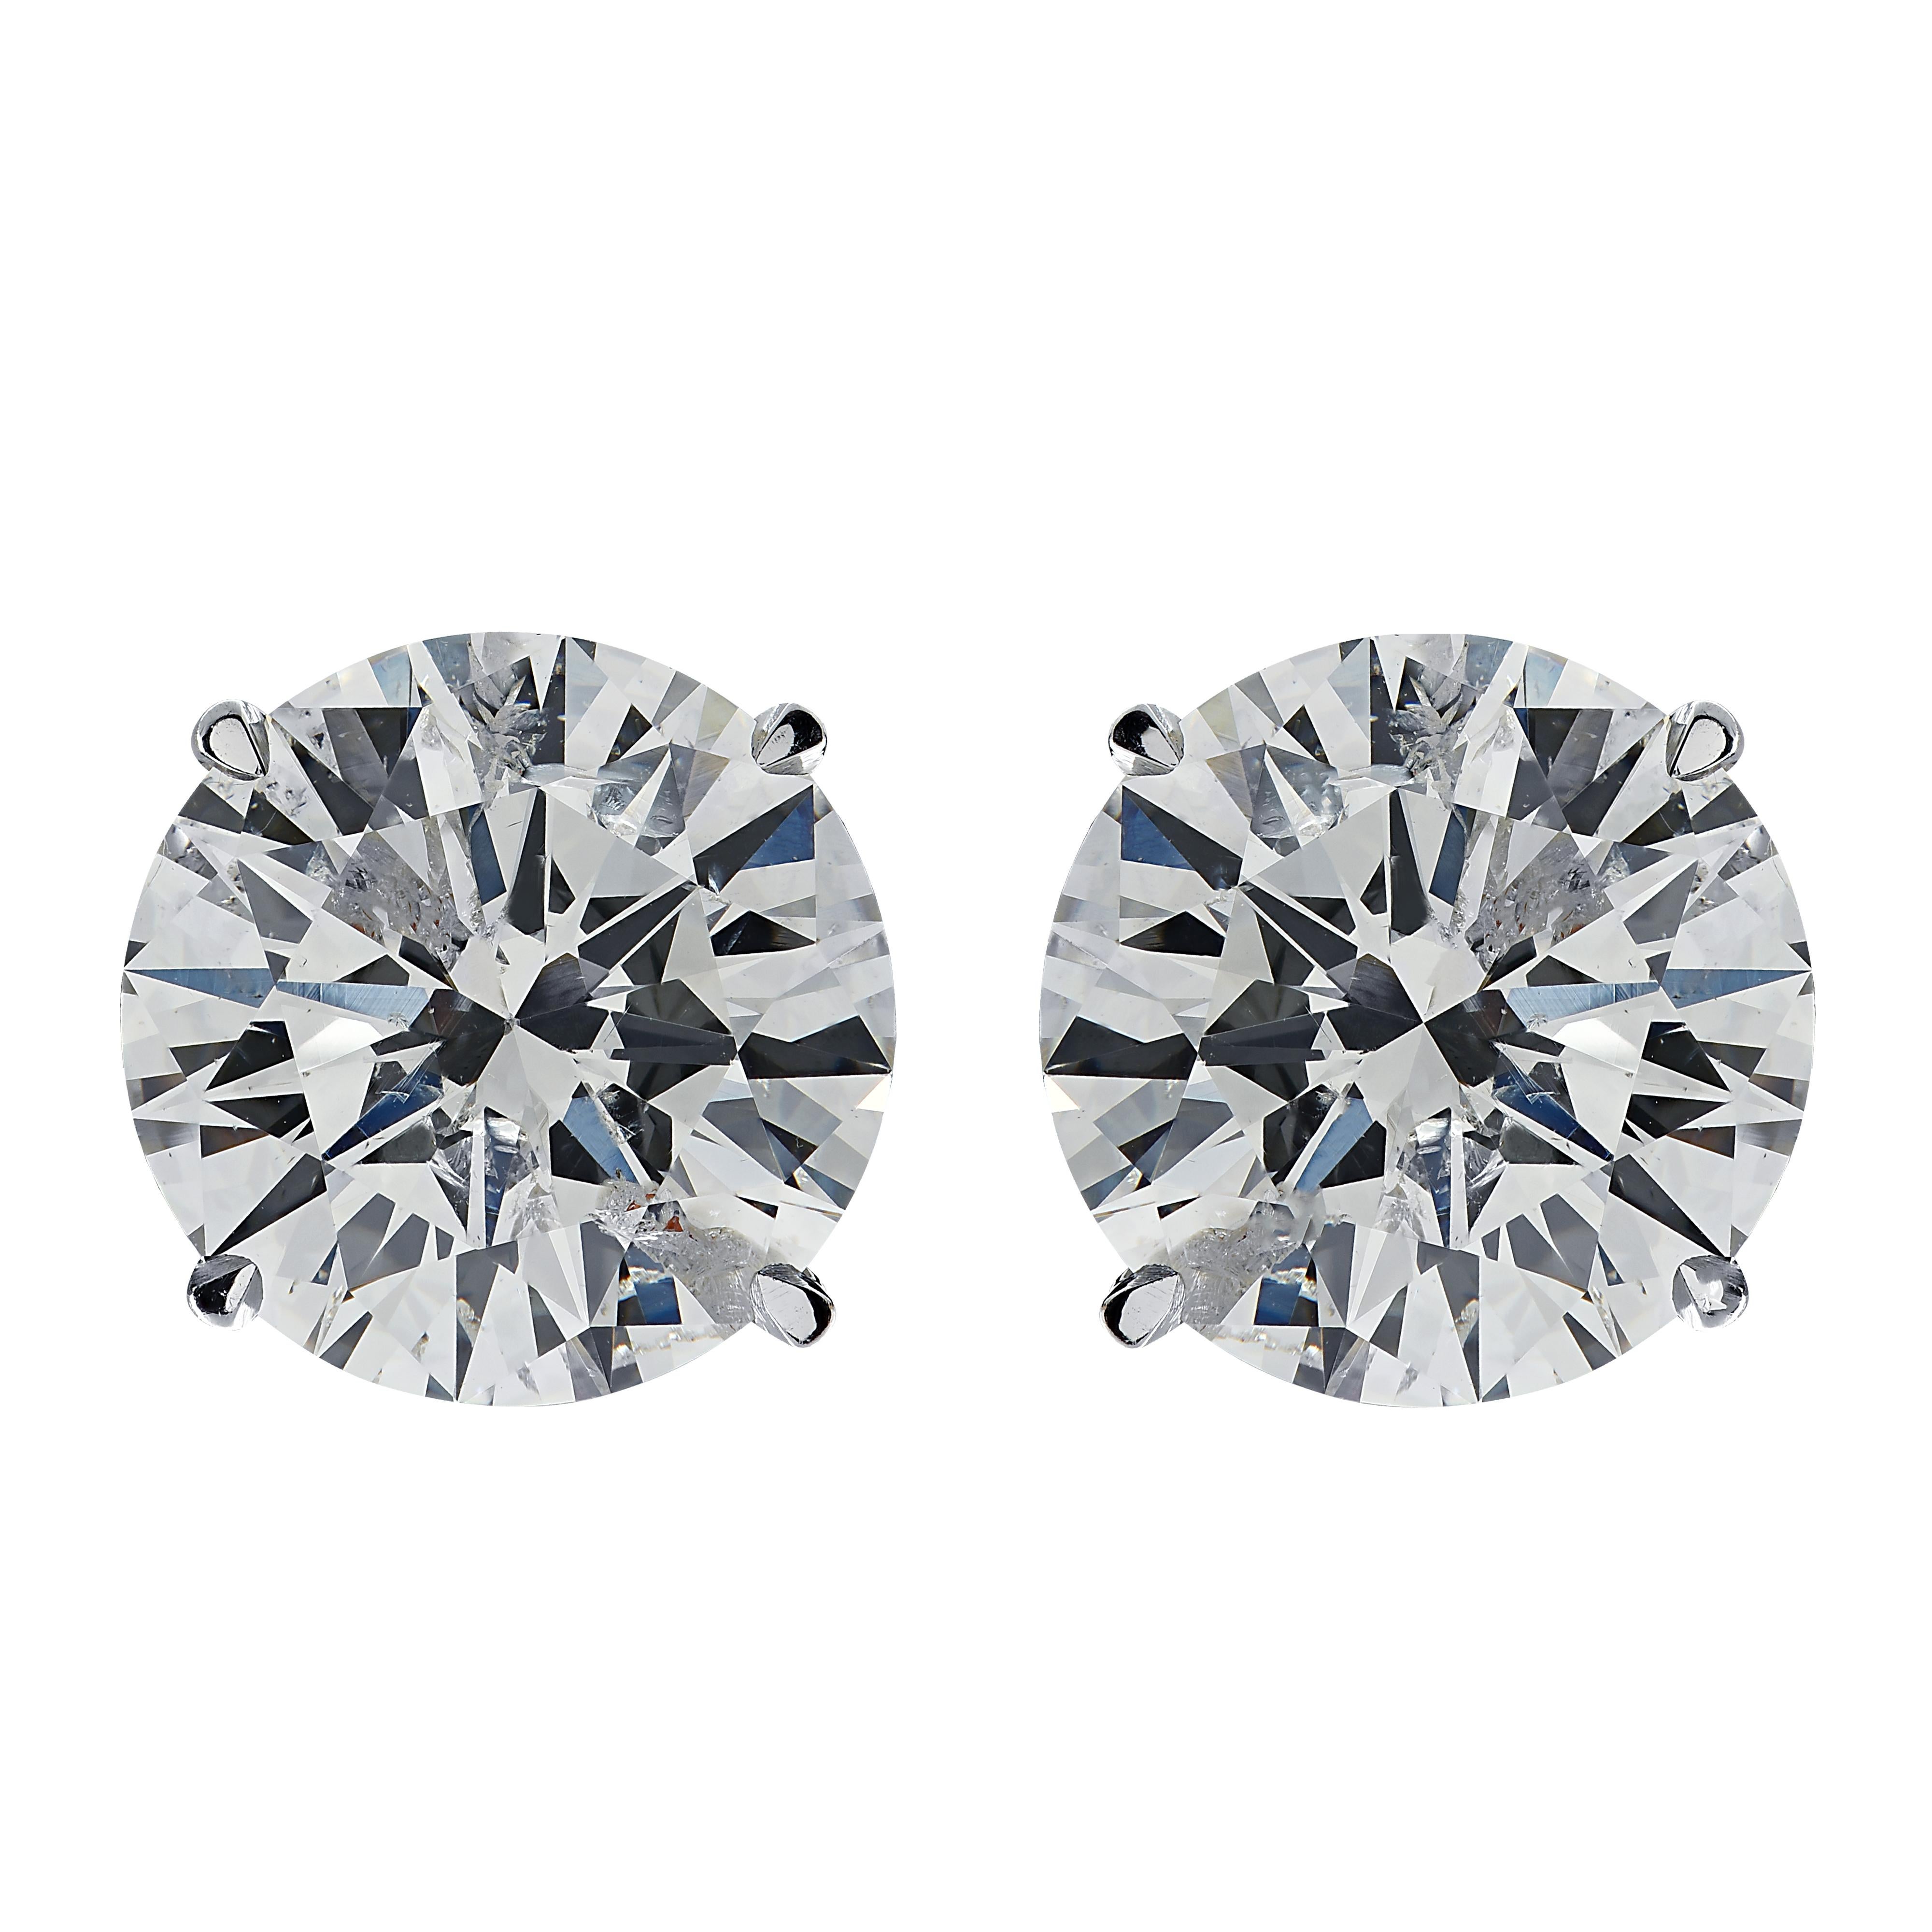 Modern Vivid Diamonds GIA Certified 3.01 Carat Diamond Solitaire Stud Earrings For Sale